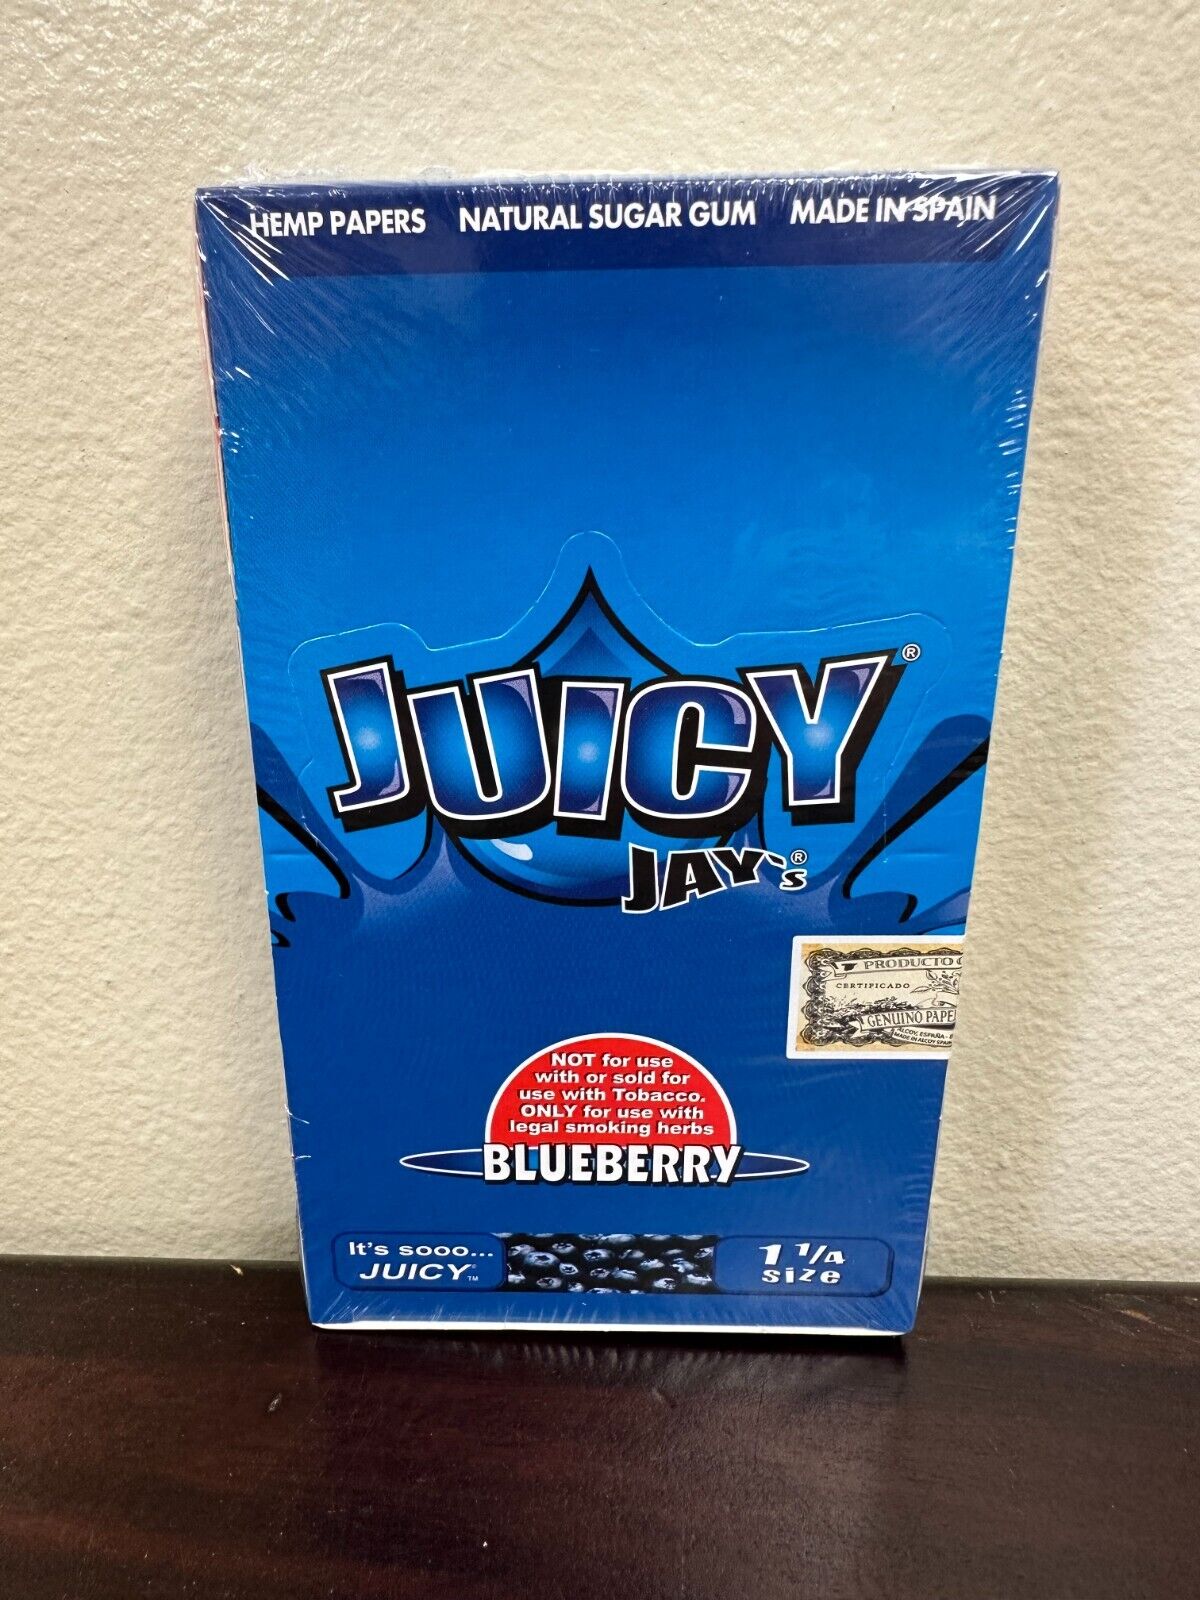 JUICY JAY'S  1 1/4 Blueberry 24 Packs Full Box Cigarette Paper